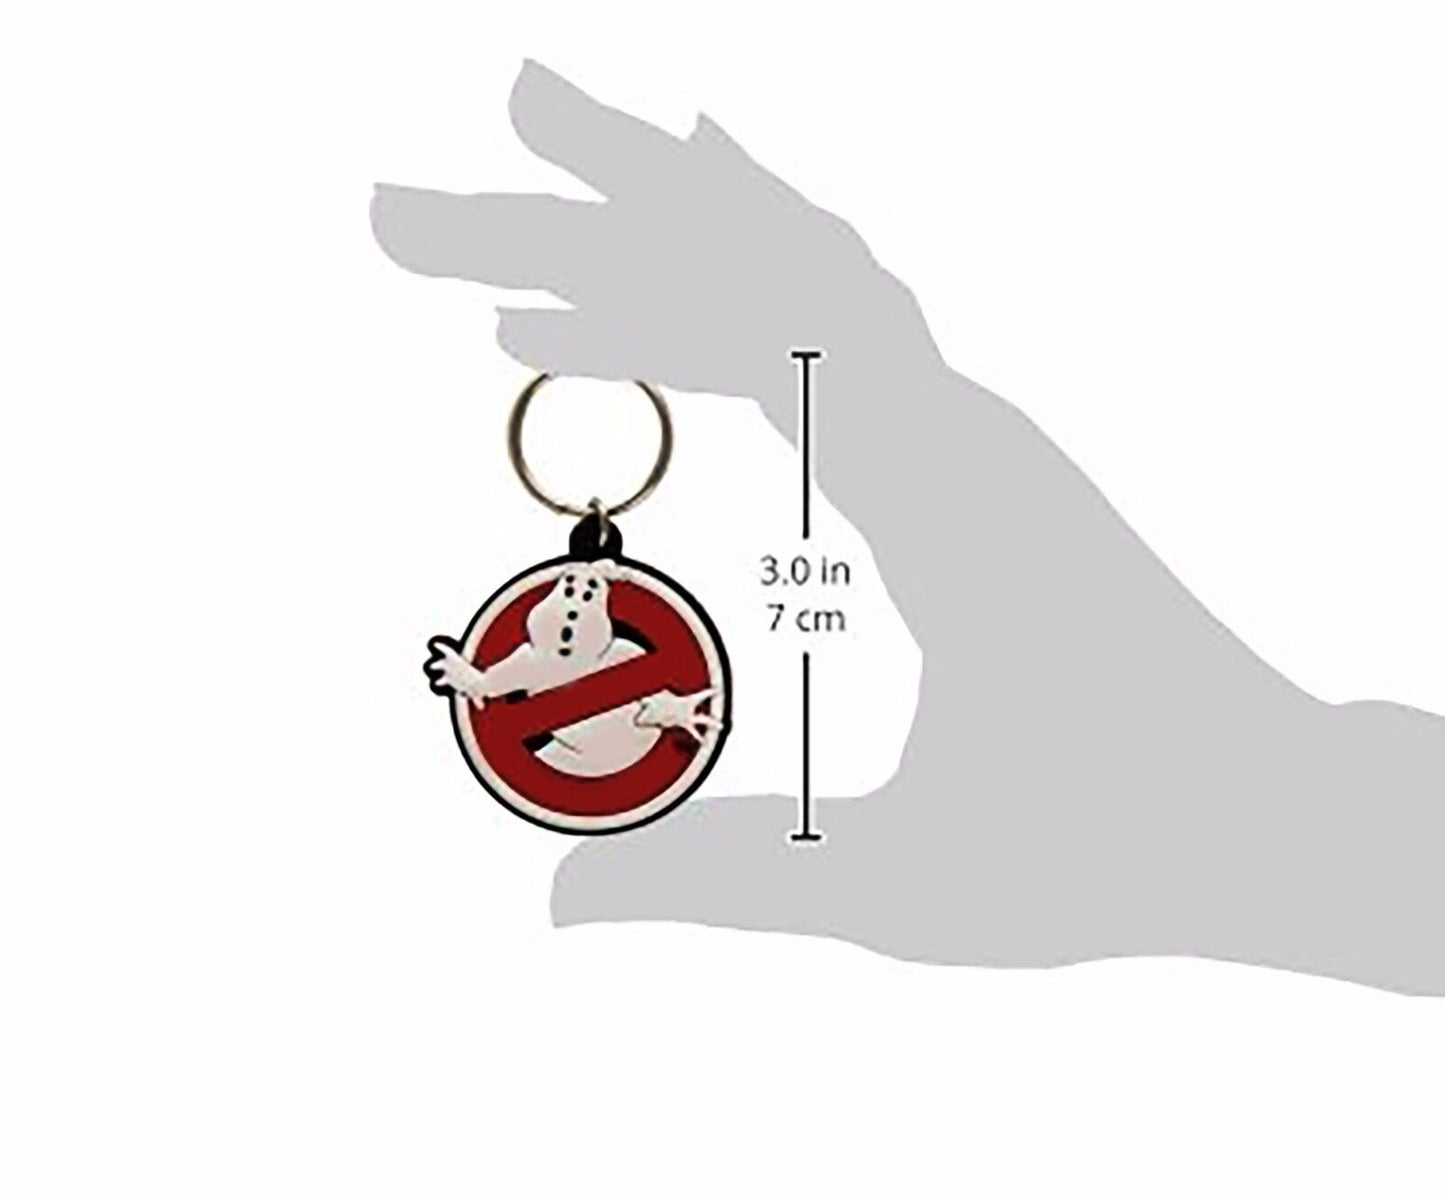 Ghostbusters Logo Rubber Keychain